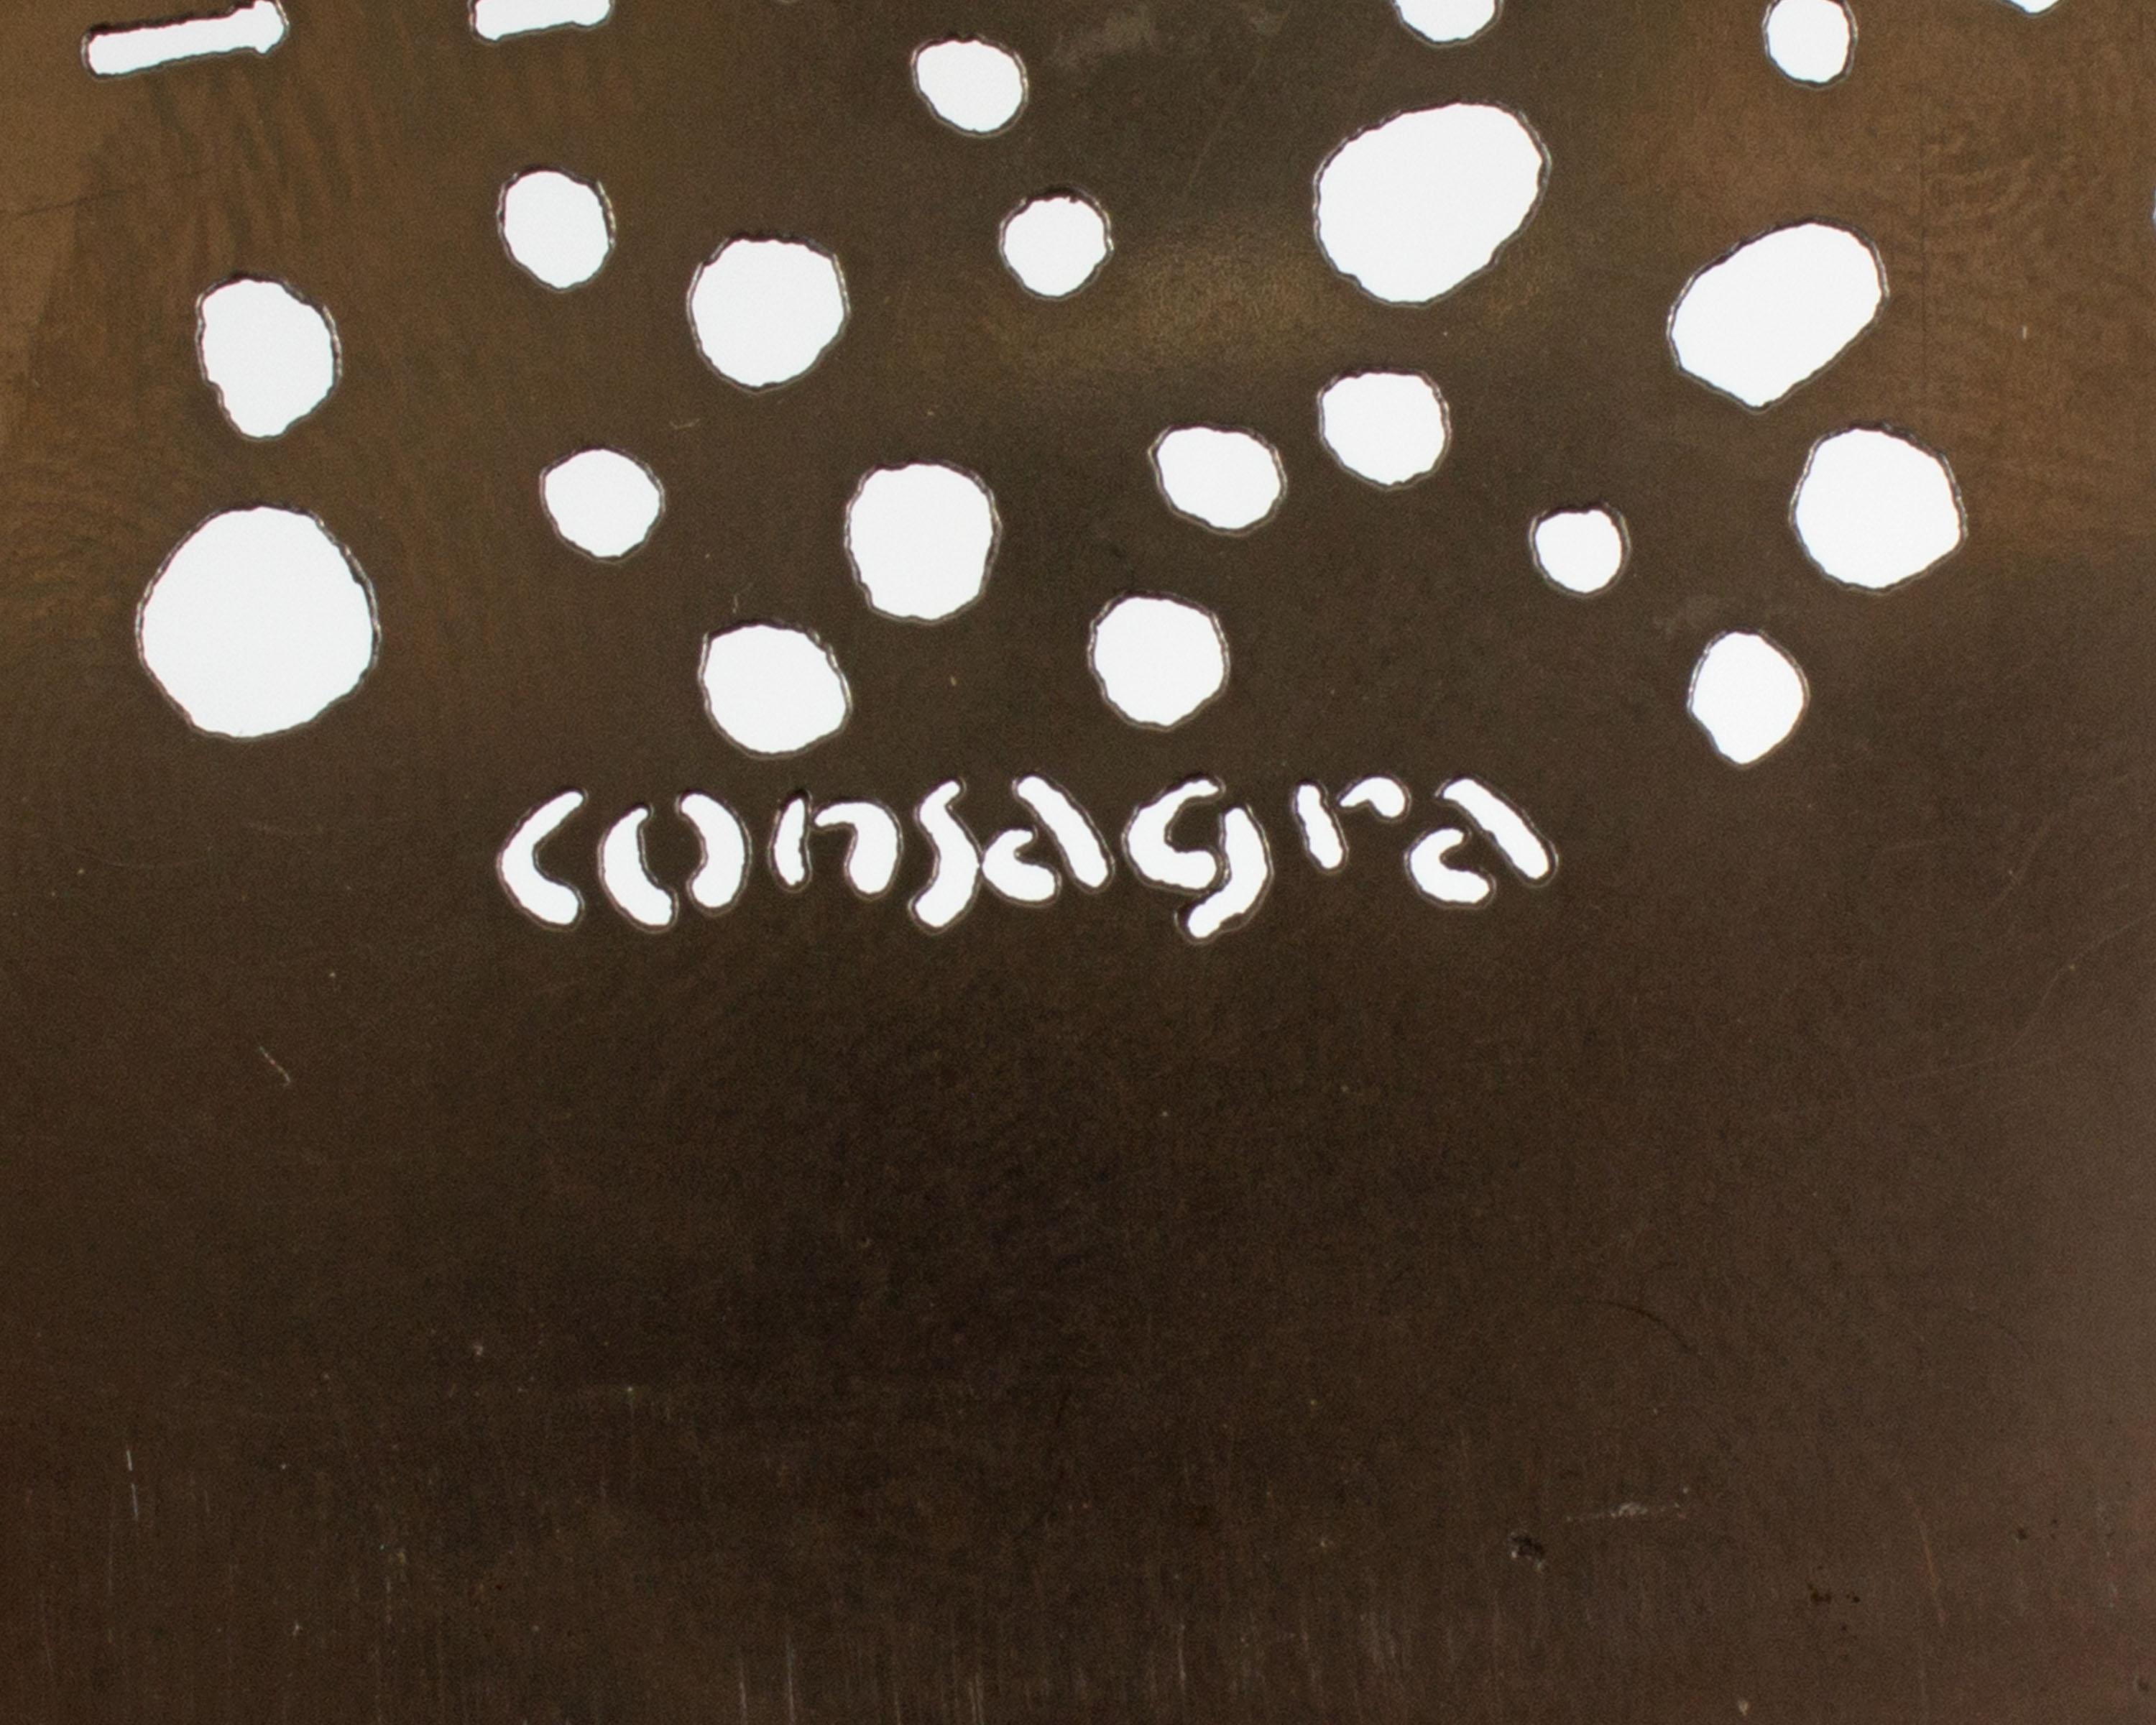 Pietro Consagra Limited Edition “Cassetta Sottilissime” Steel Sculpture For Sale 5